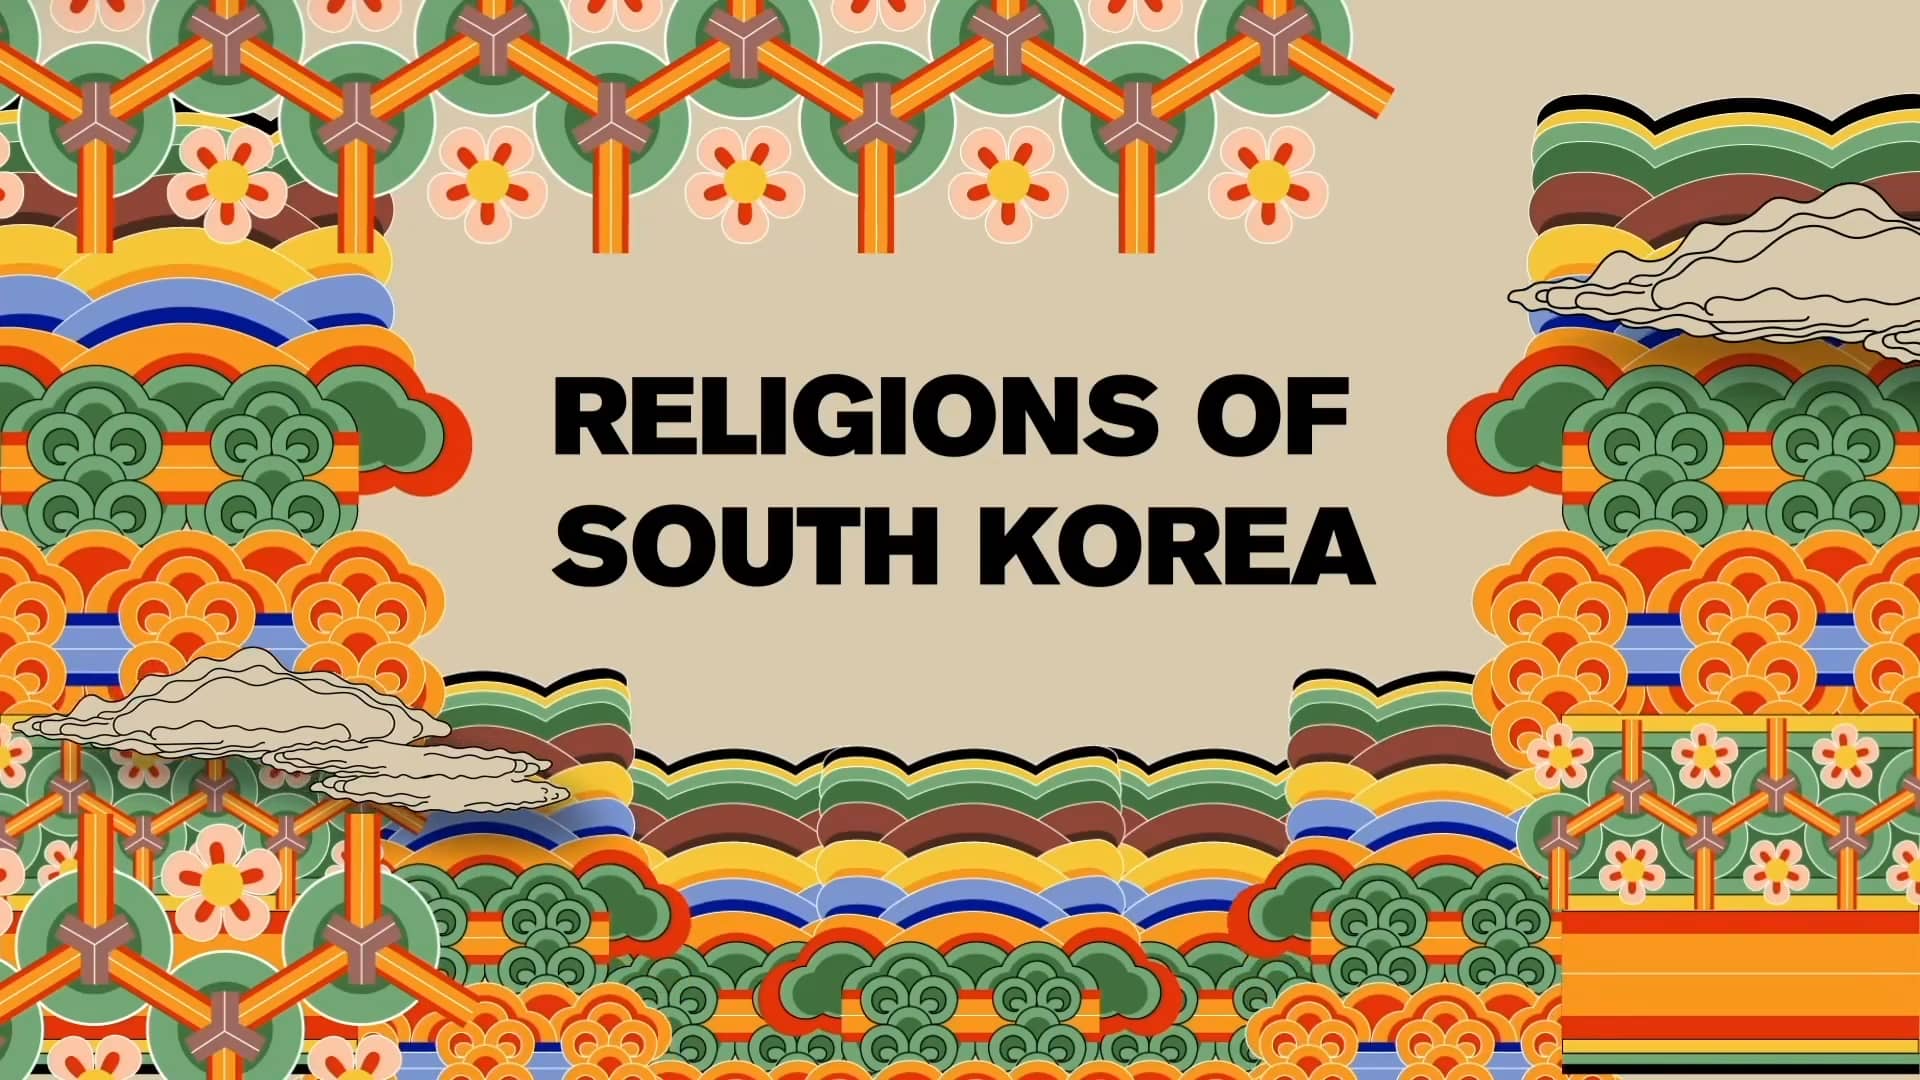 Religions of South Korea on Vimeo